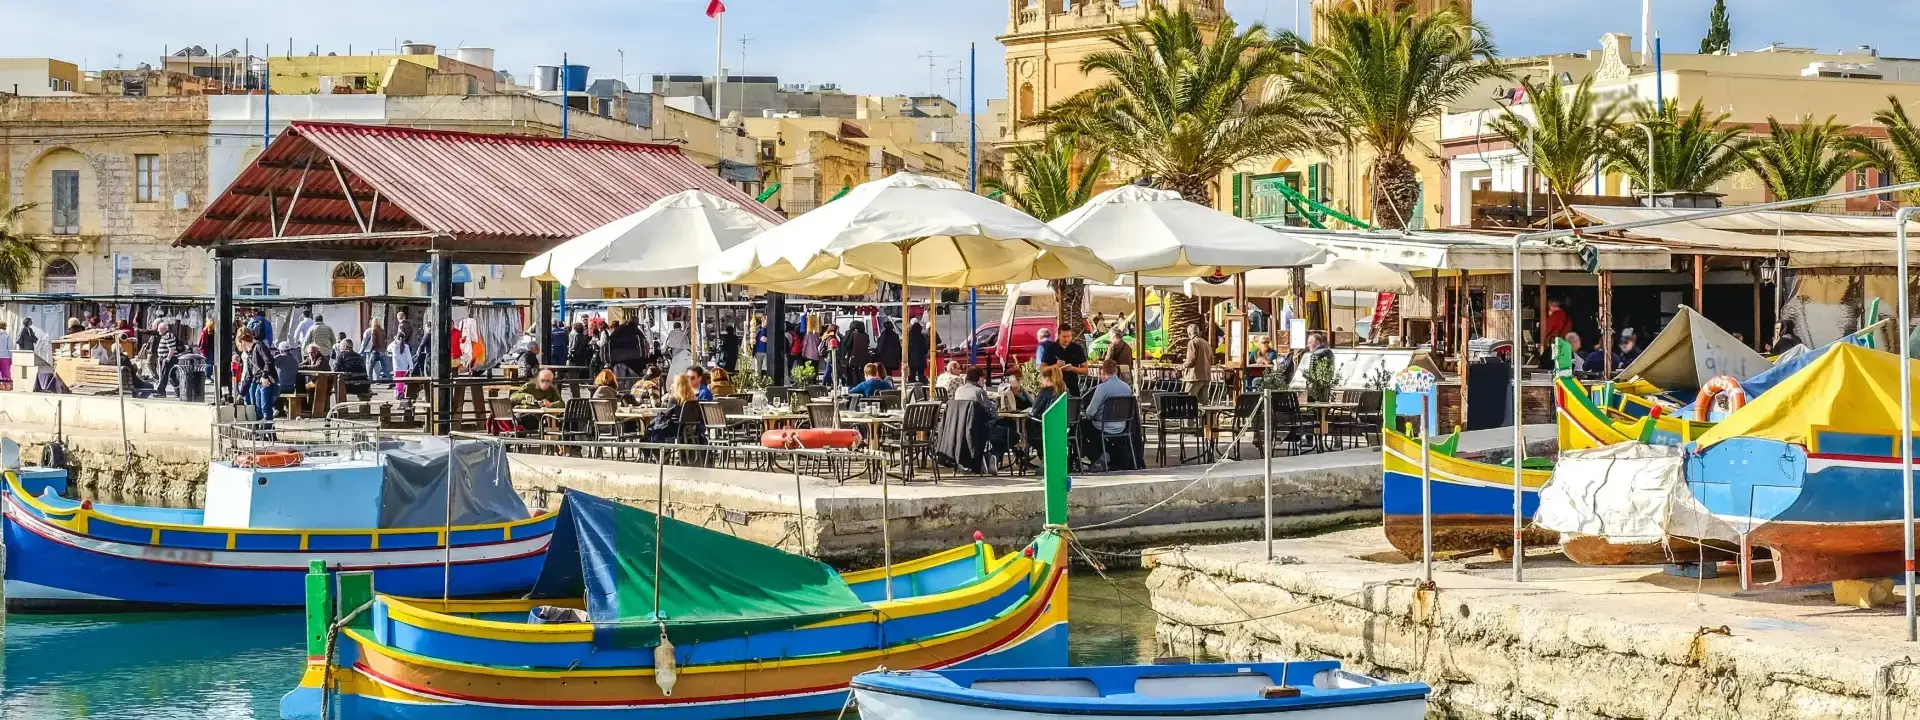 Find the best Job boards in Malta in 2023